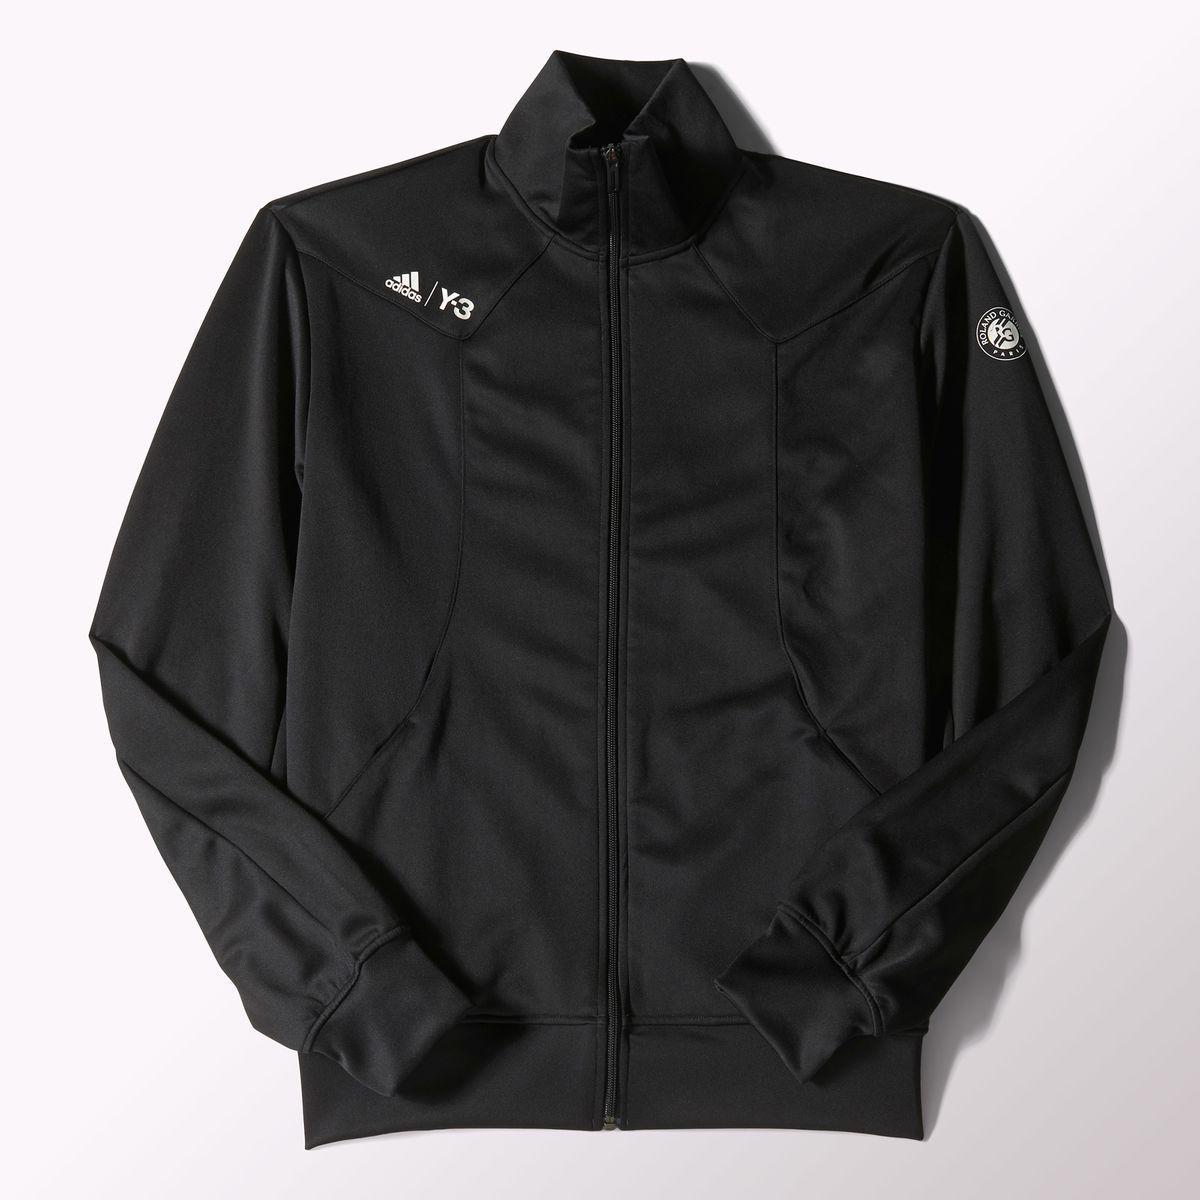 y3 leather jacket